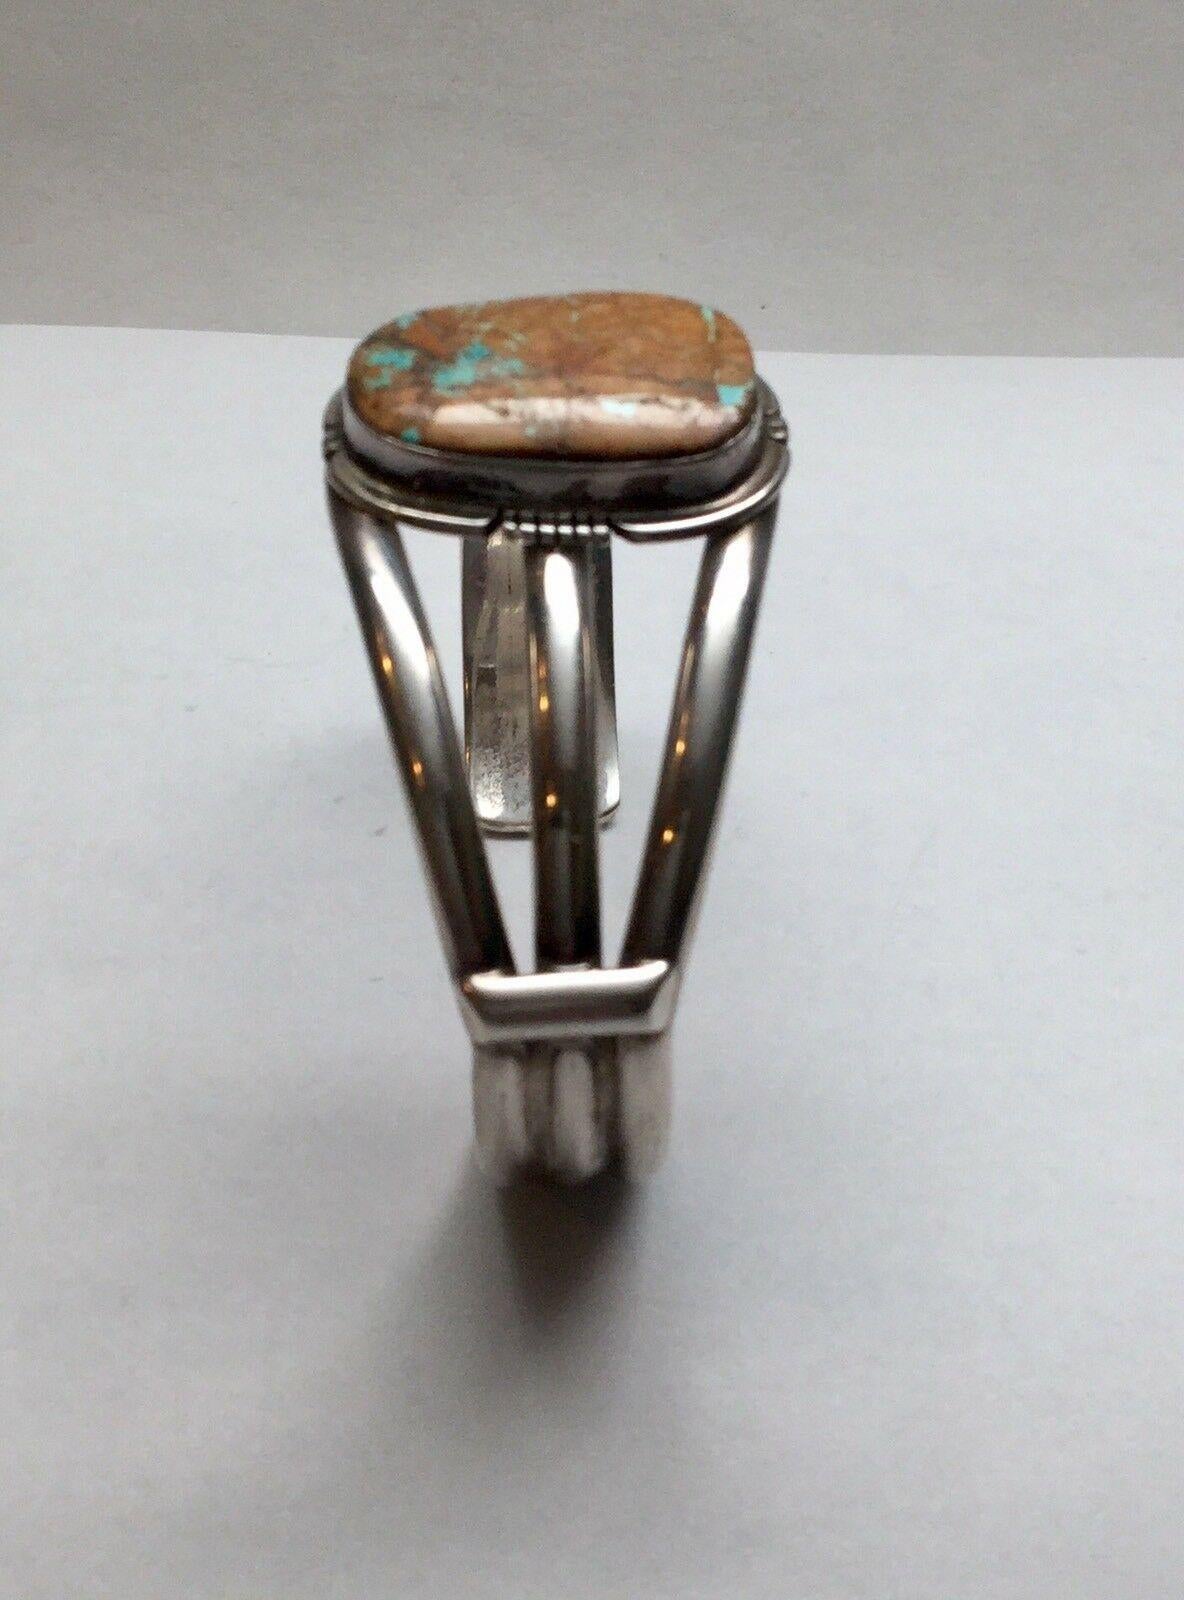 Philip Sanchez, Navajo sterling silver Royston Ribbon turquoise cuff bracelet.

Marked: P.Sanchez, Sterling

Measures: 5 1/2